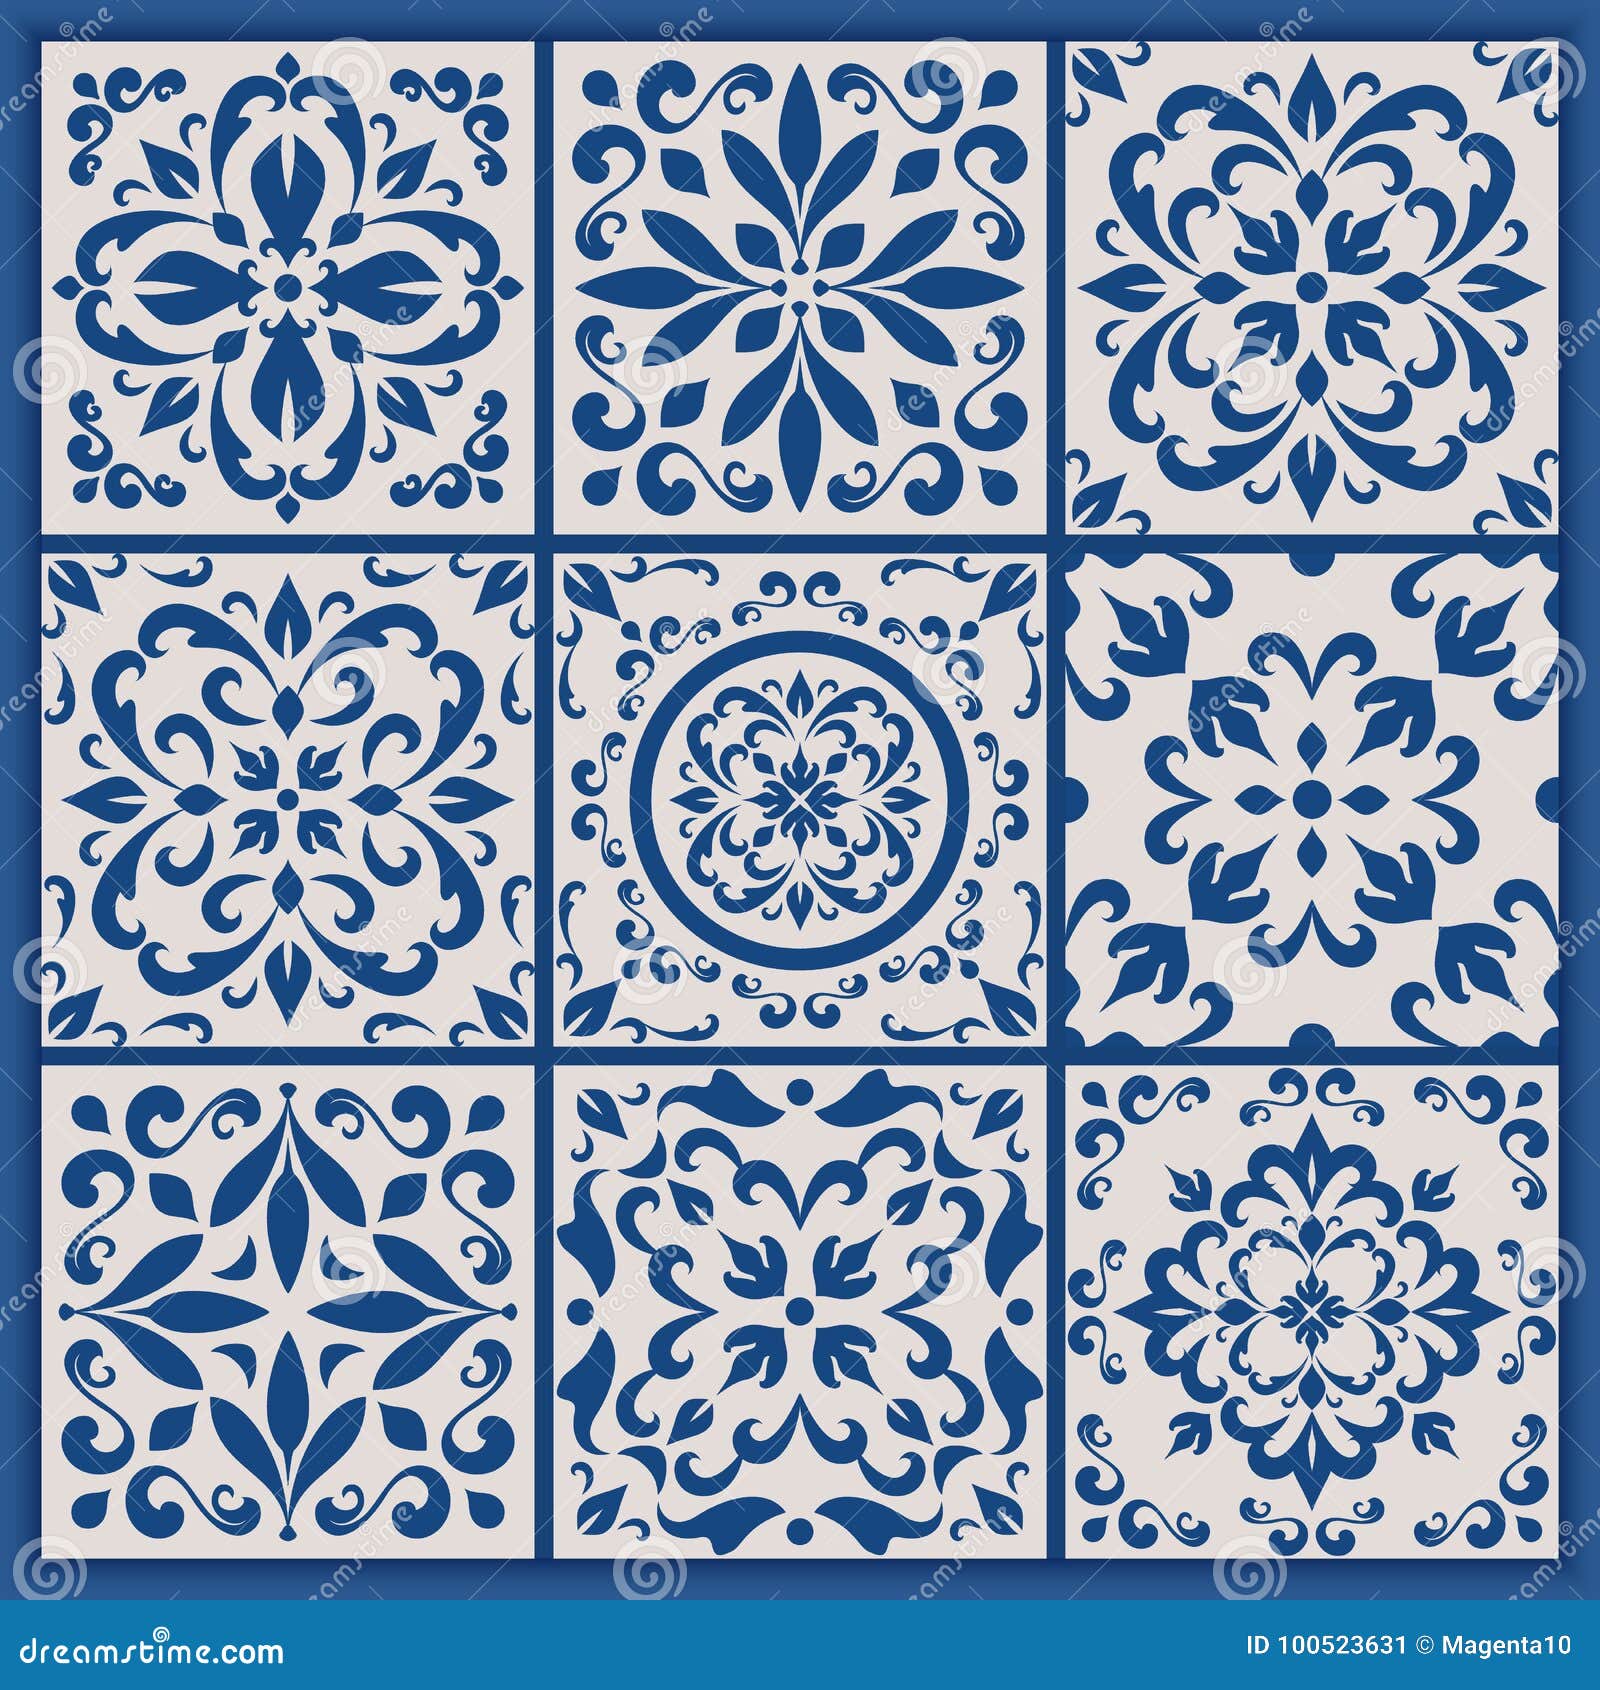 portuguese tiles with azulejo ornaments